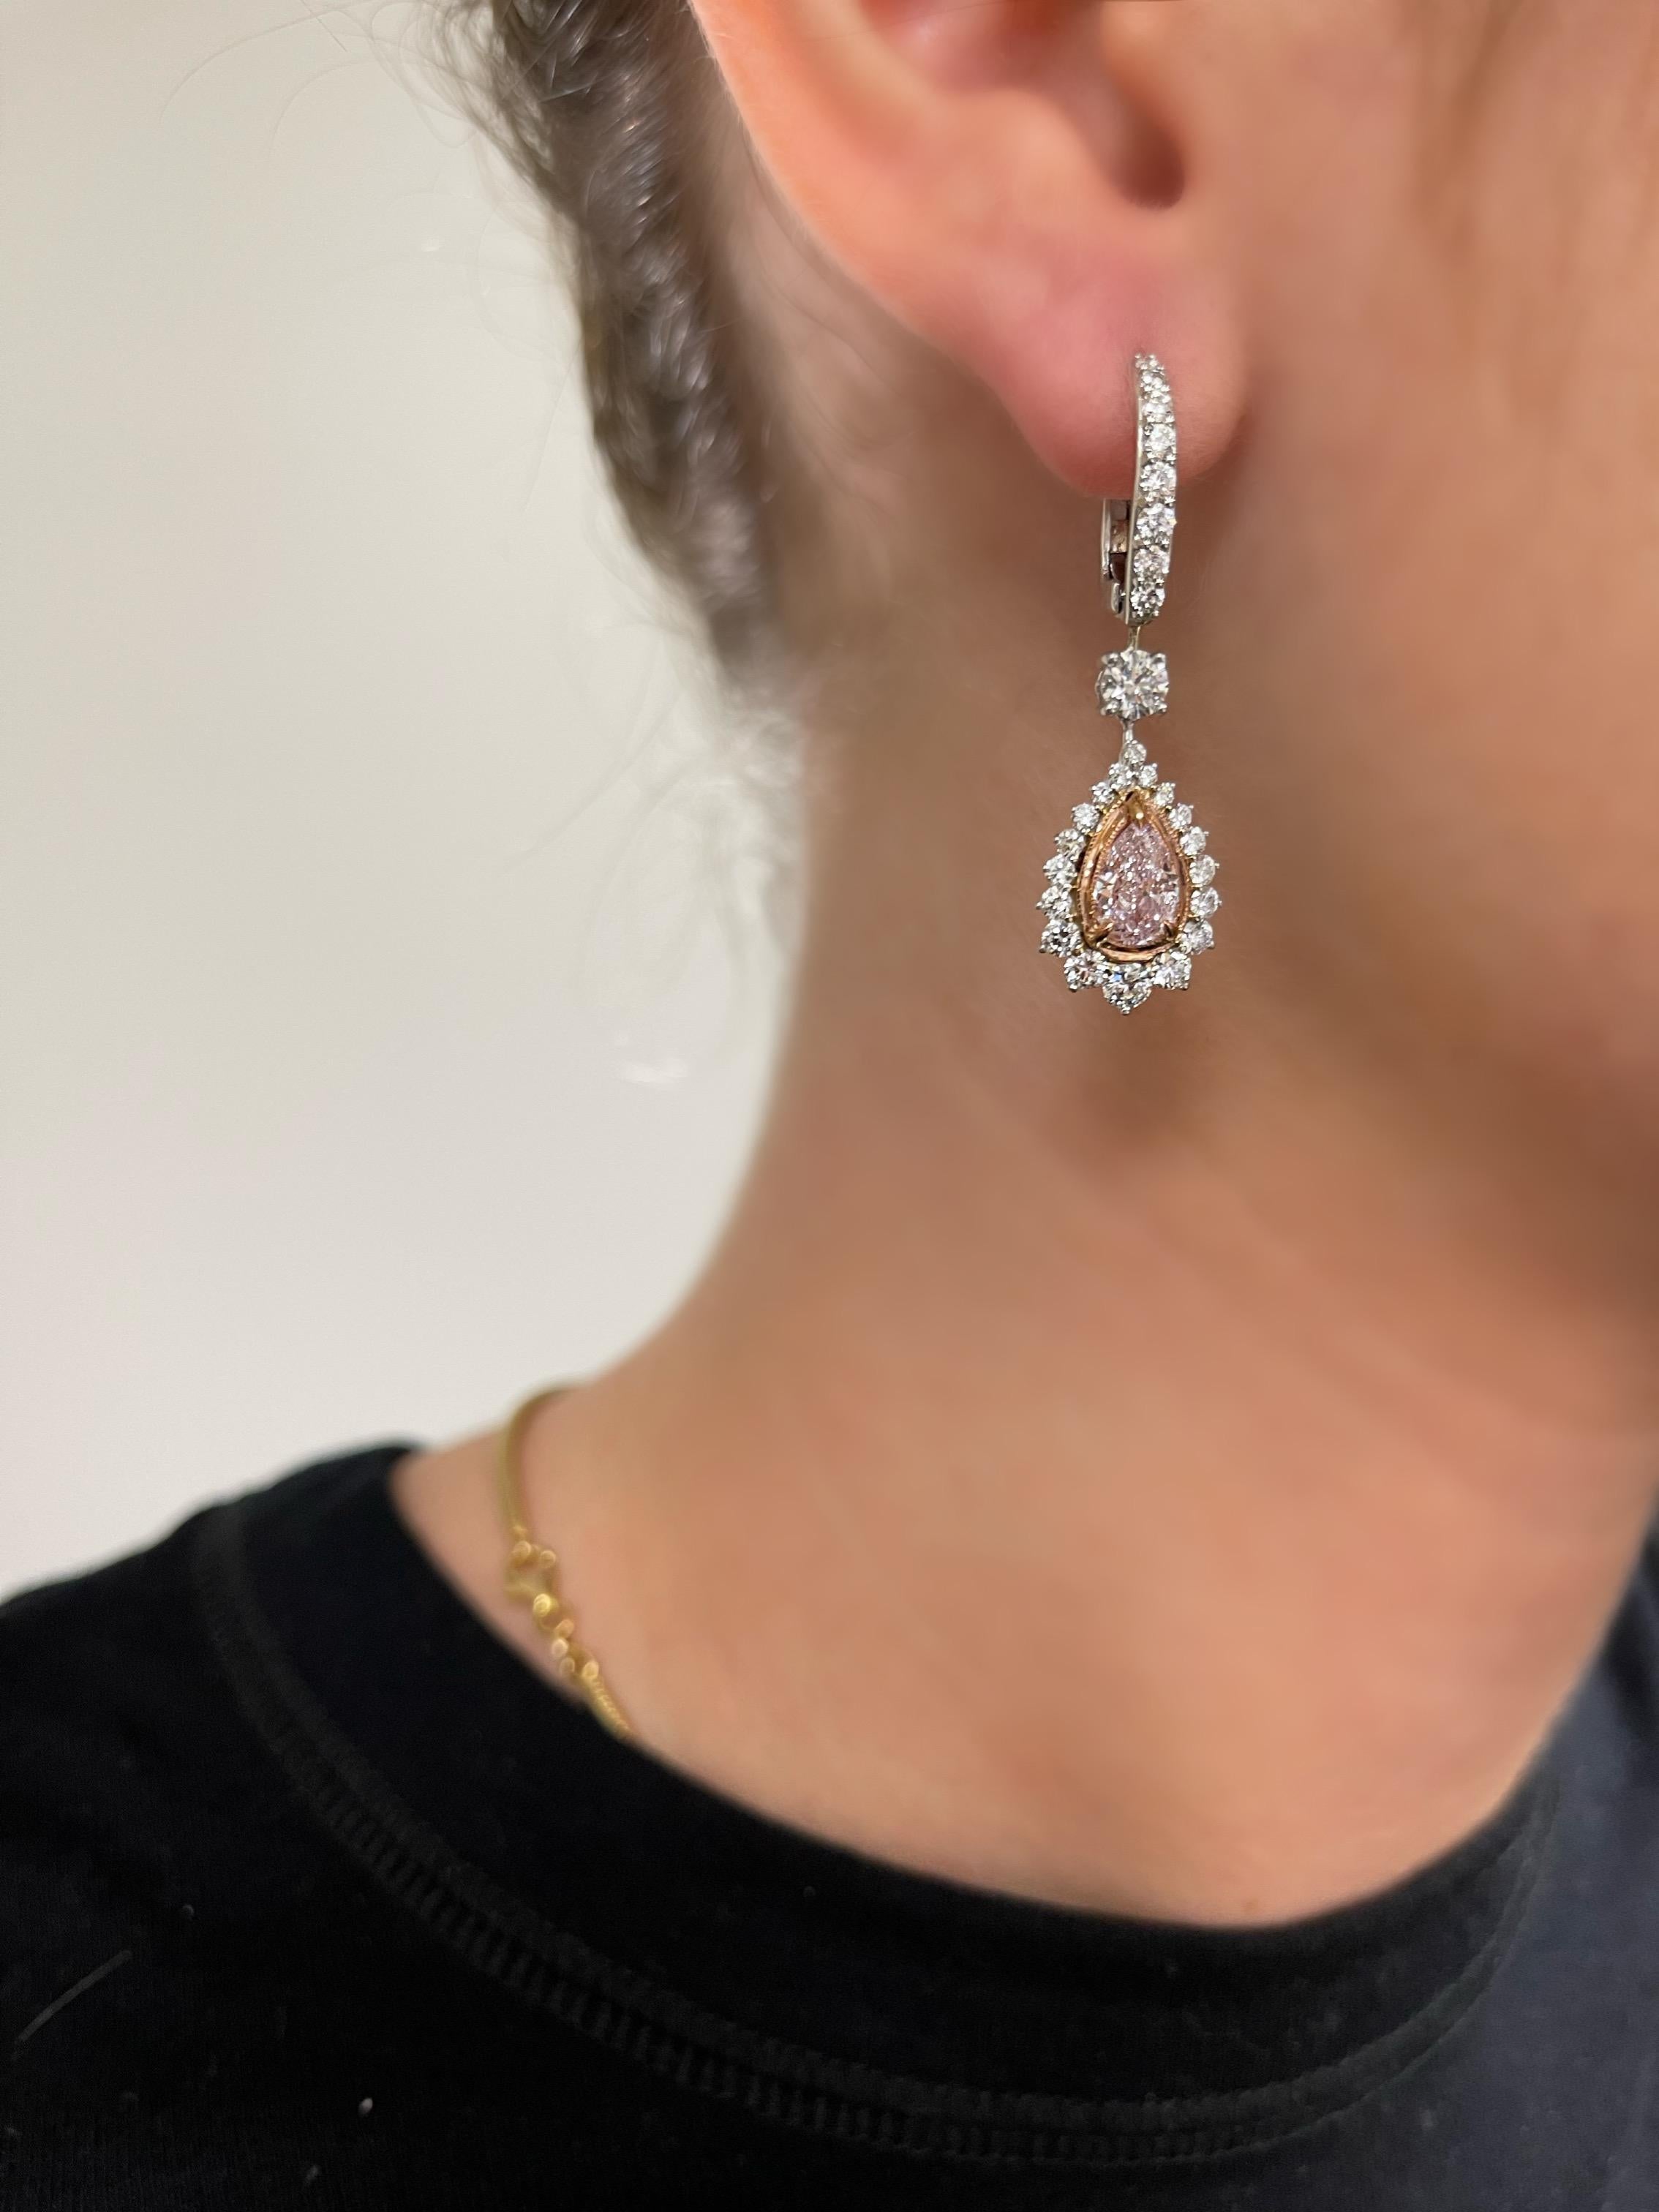 Pear Cut 2 Carat Light Pink Diamond Drop Earrings, GIA Certified, Set In 18k White Gold. For Sale